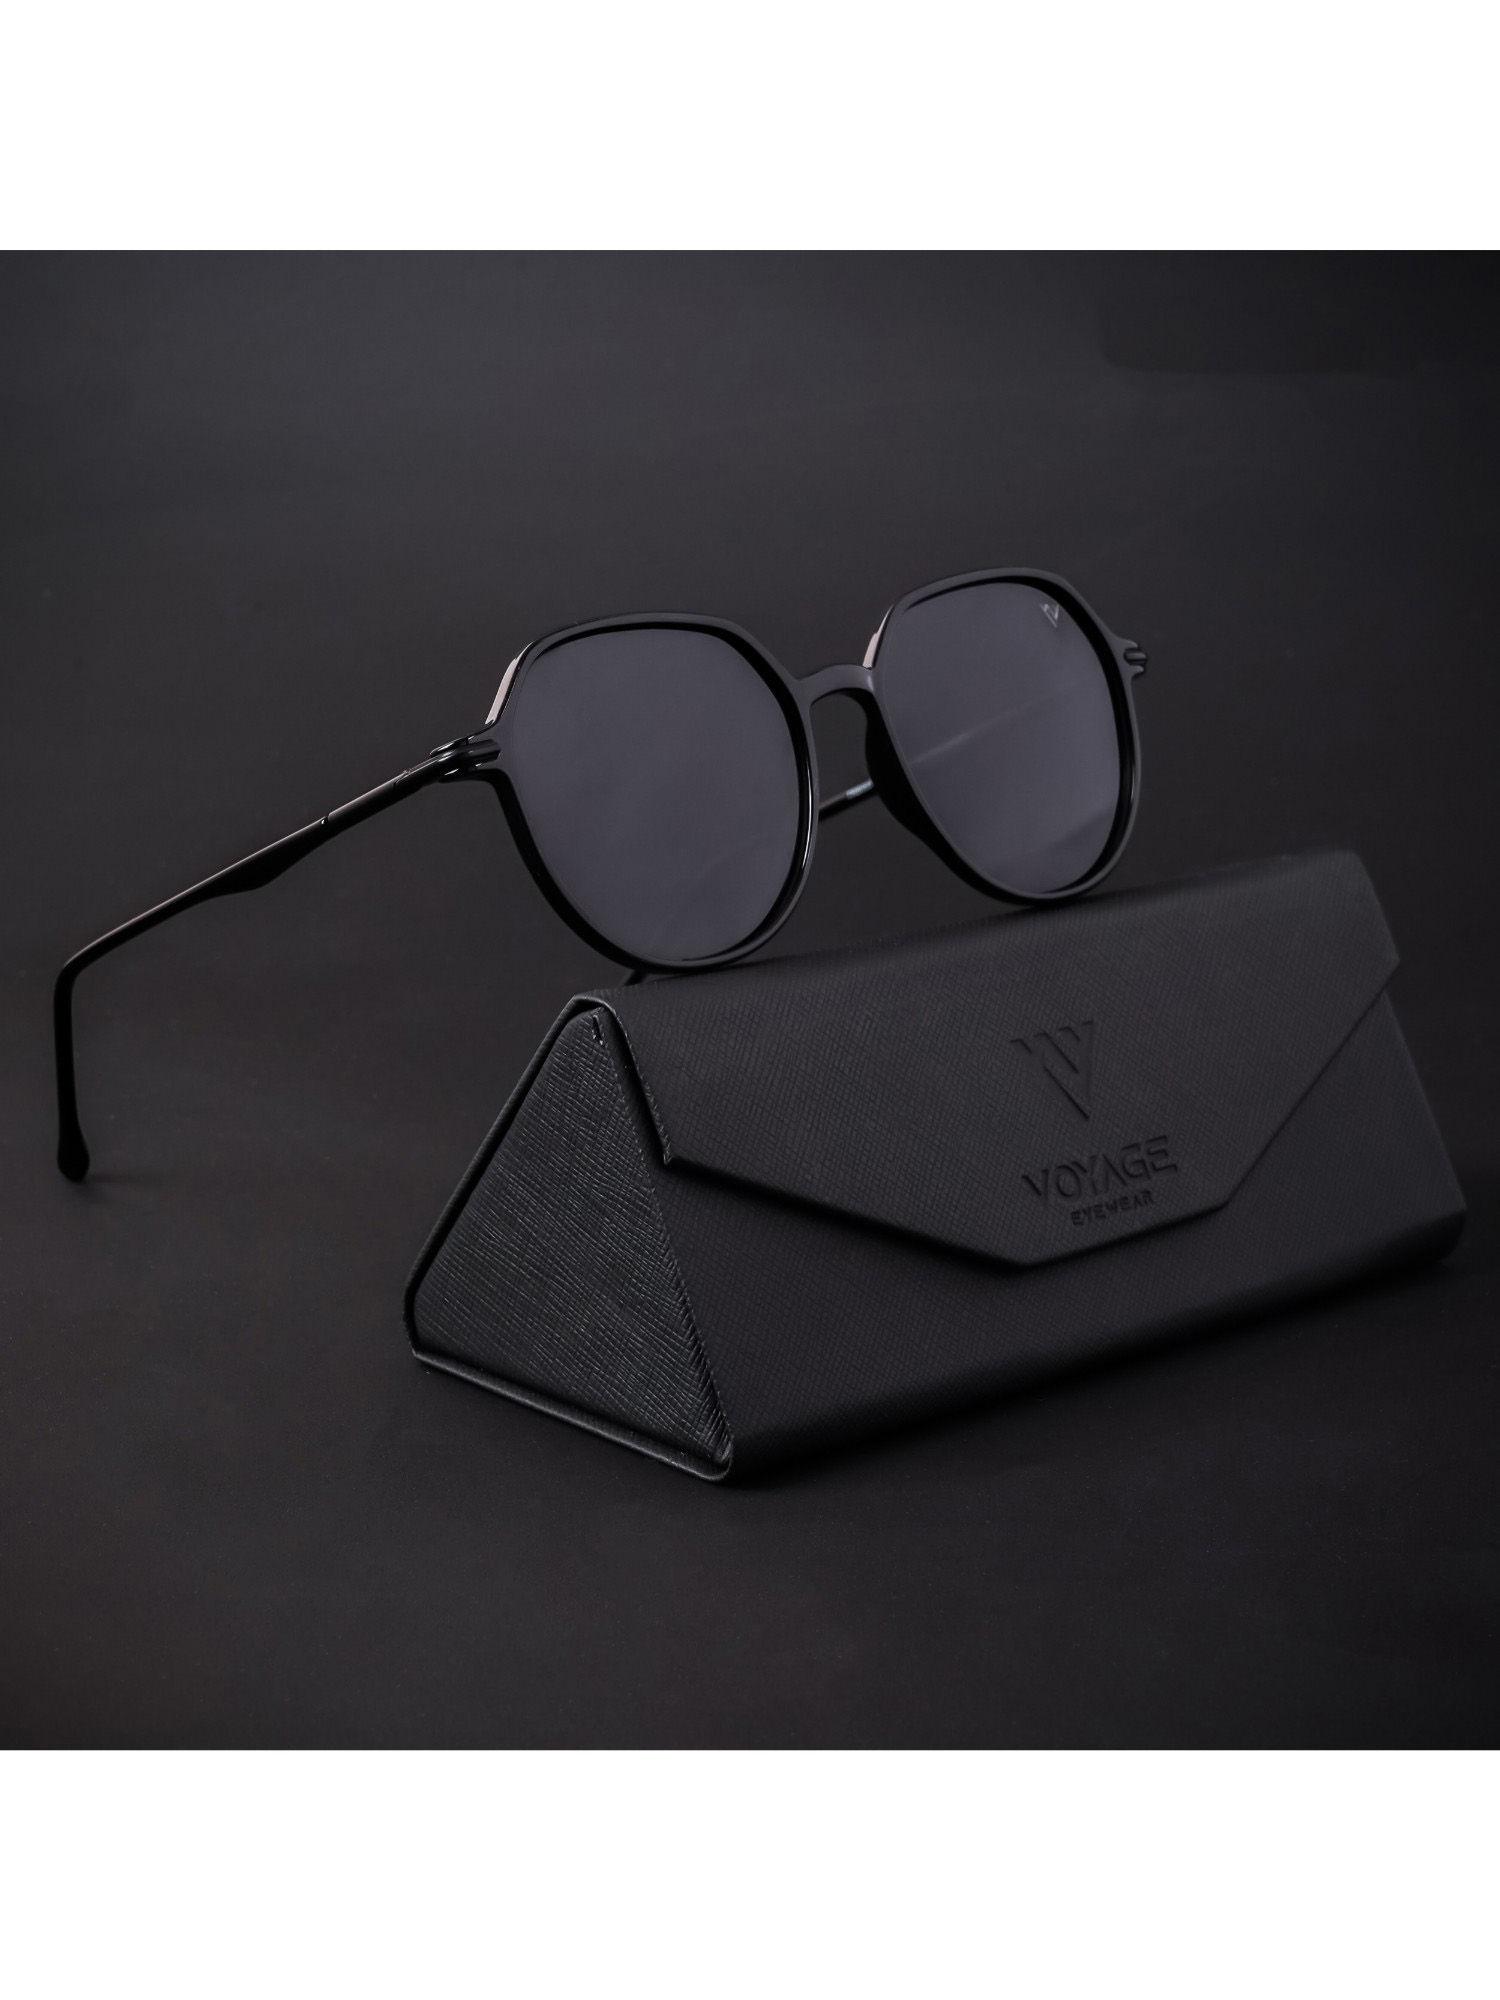 shine black polarized round sunglasses for men & women - tr8068pmg4297